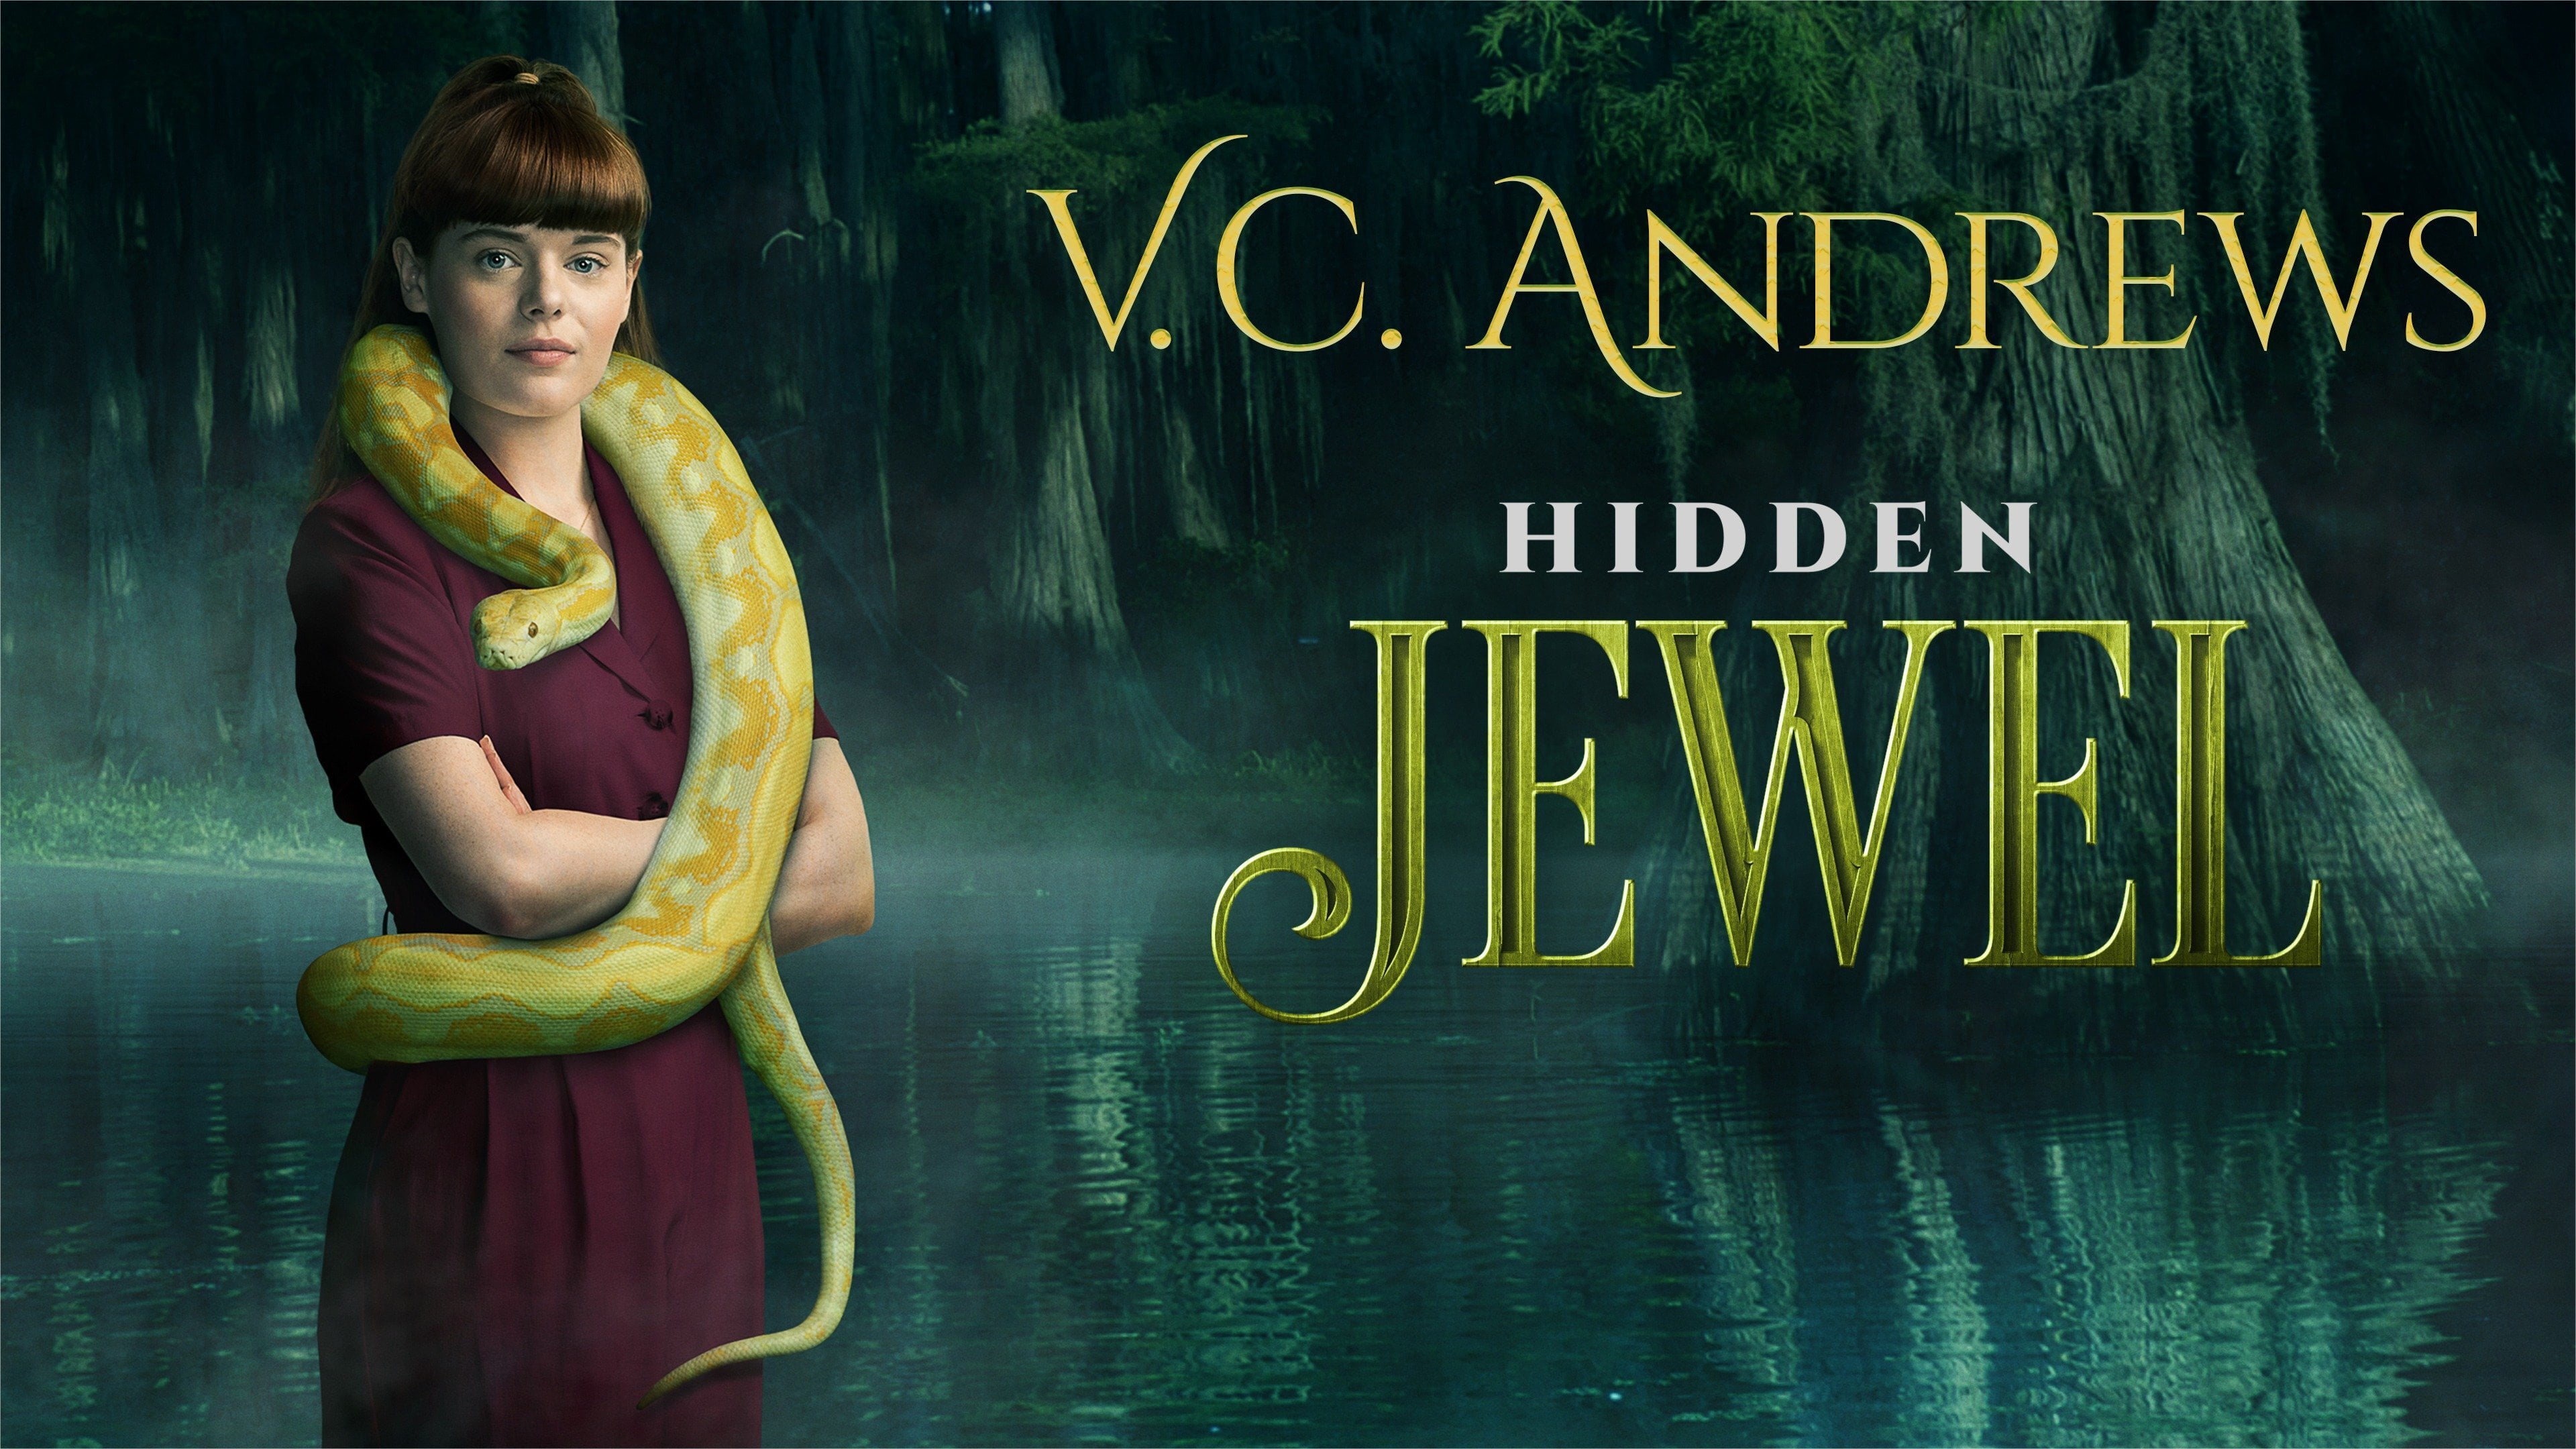 V.C. Andrews' Hidden Jewel